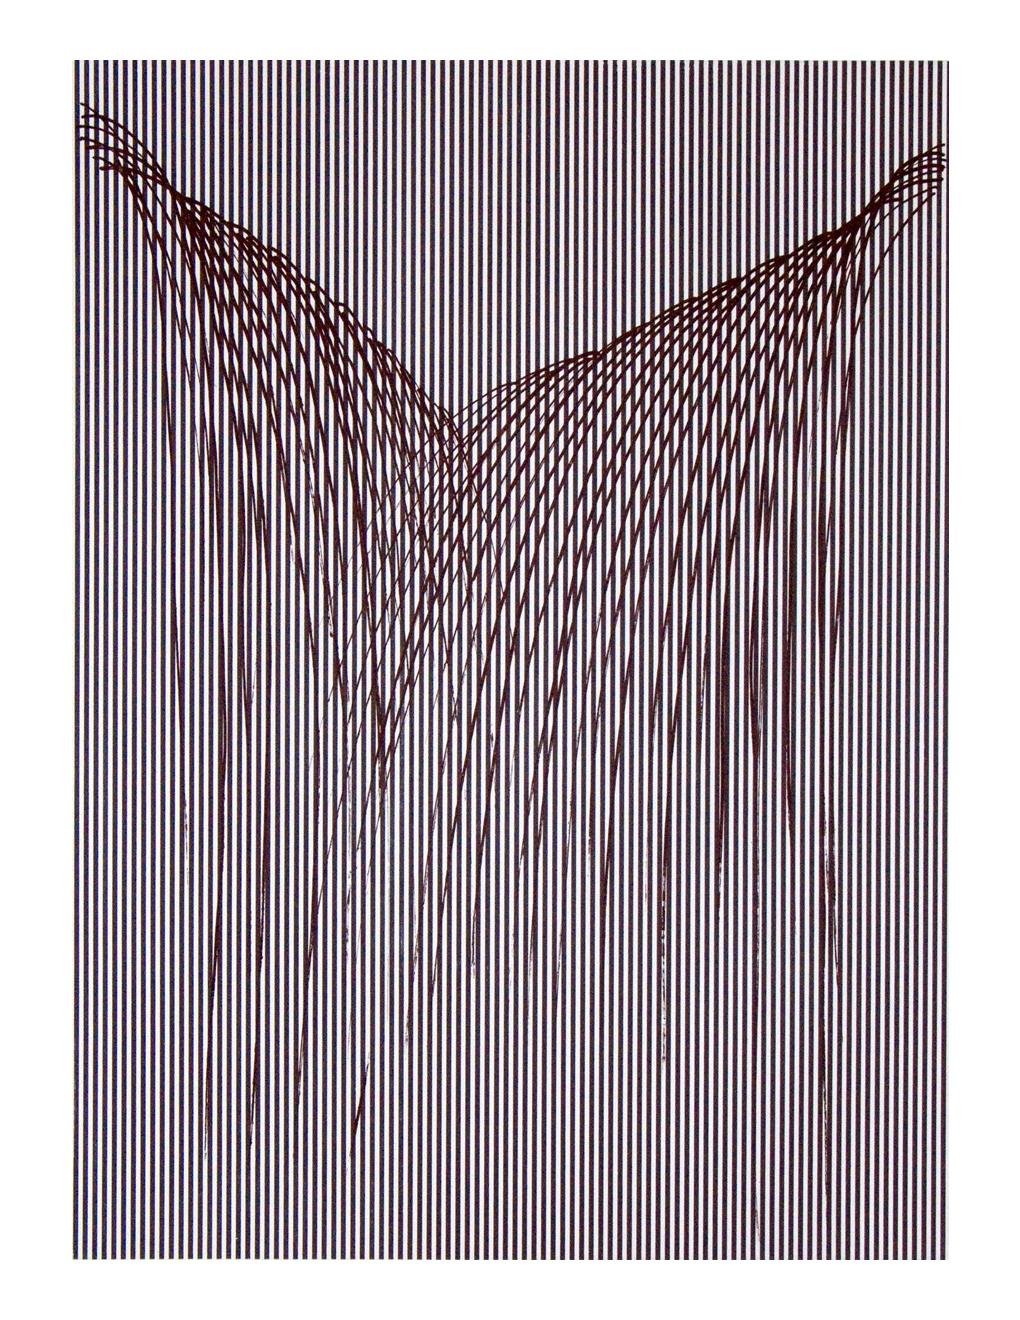 Tom Orr Abstract Print - Waterfall III